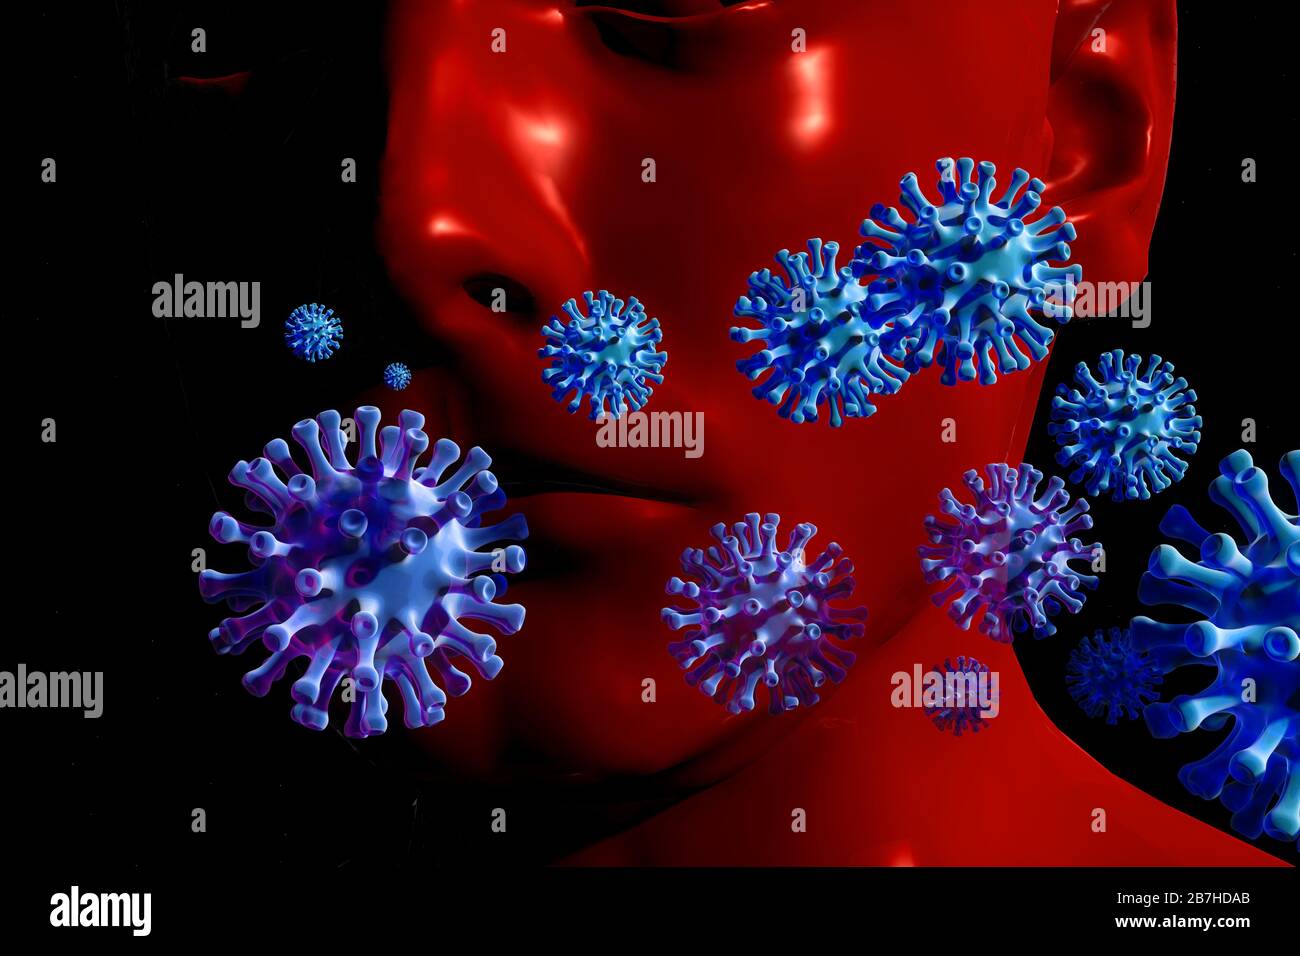 ein fieses Virus befaellt die Welt - Symbolbild: CGI-Visualizierung: Coronavirus Covid 19, SARS 2, Mensch/ un nuovo virus orribile infesta pianeta terra - Foto Stock